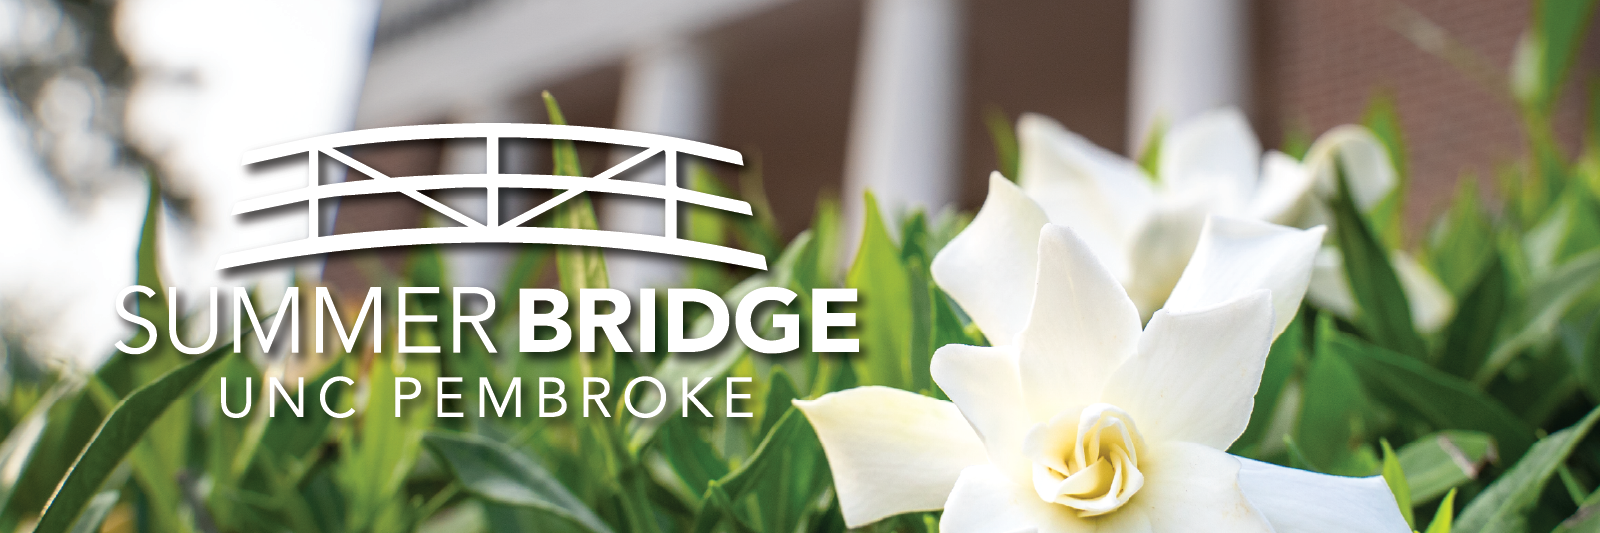 SummerBridge logo with flower